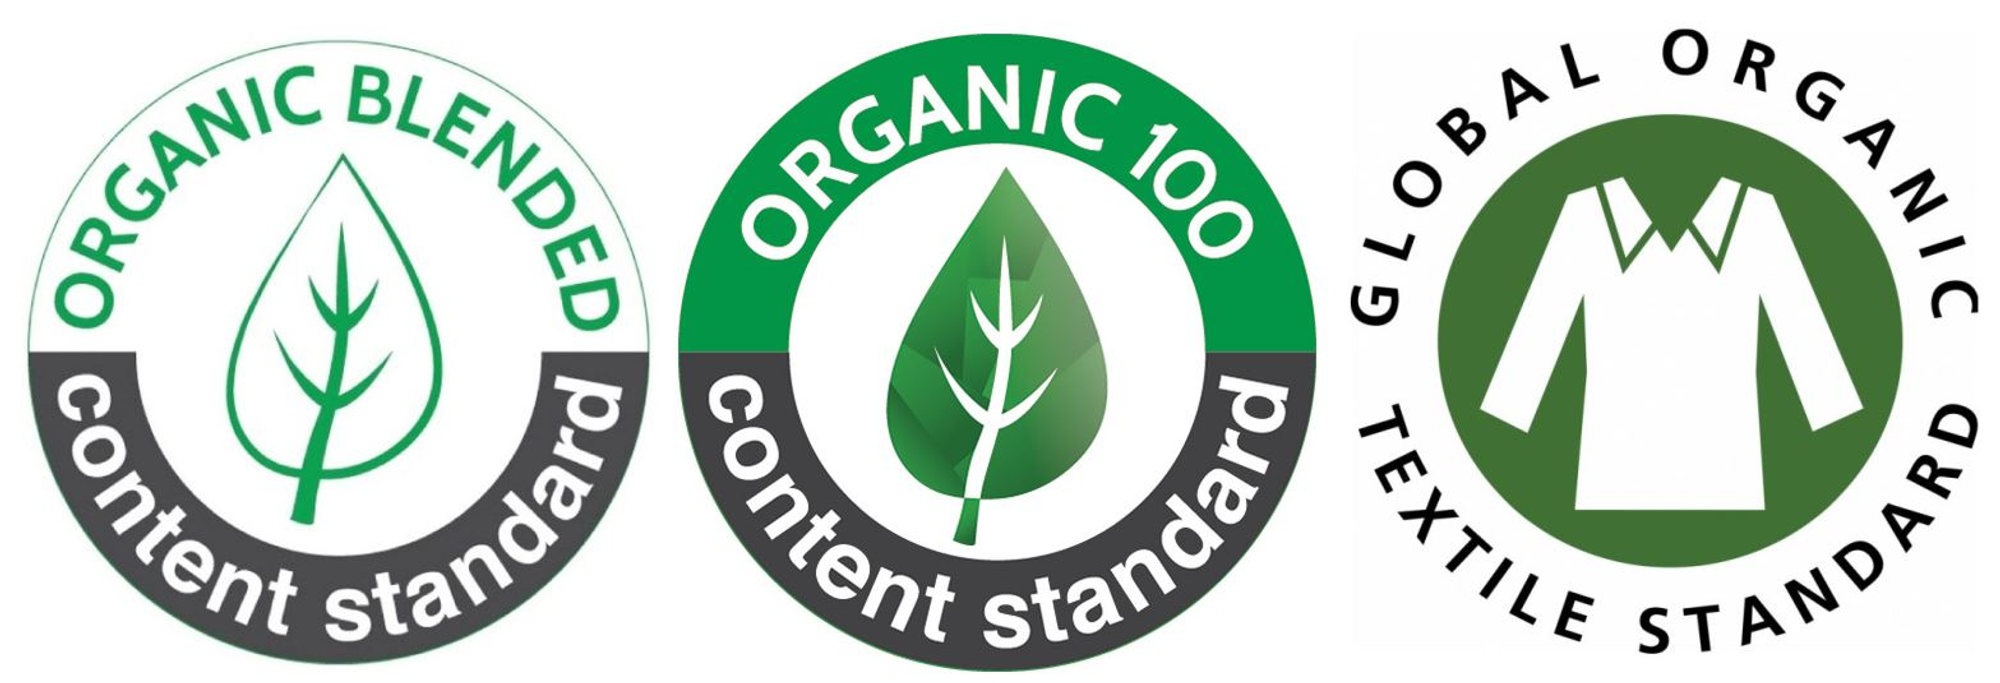 organic content standard (ocs)